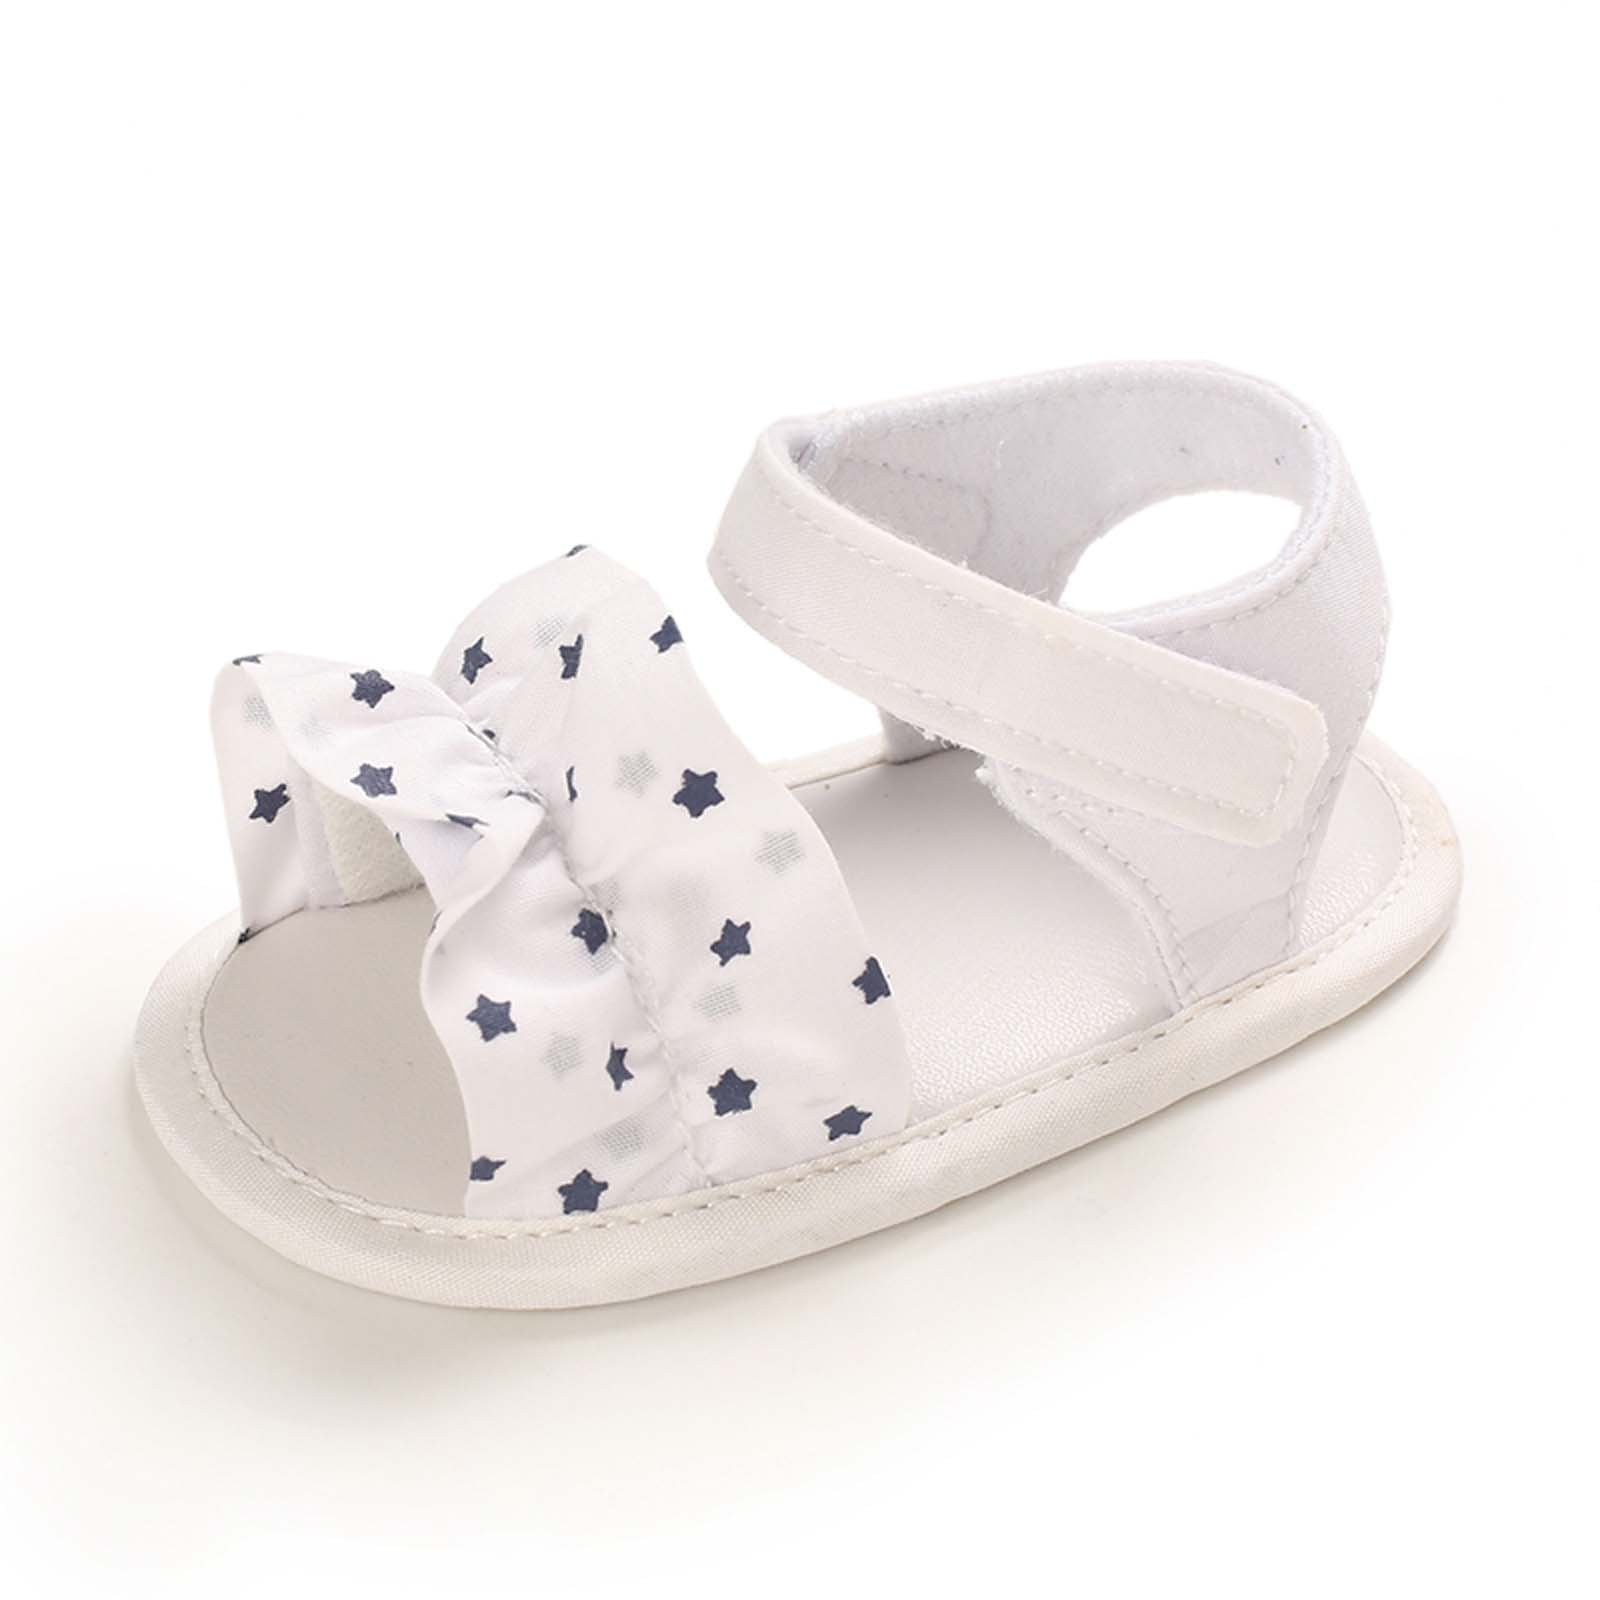 Lanhui Newborn Anti-Slip Baby Shoes Cute Toddler Girl Flower Soft Baby Shoes